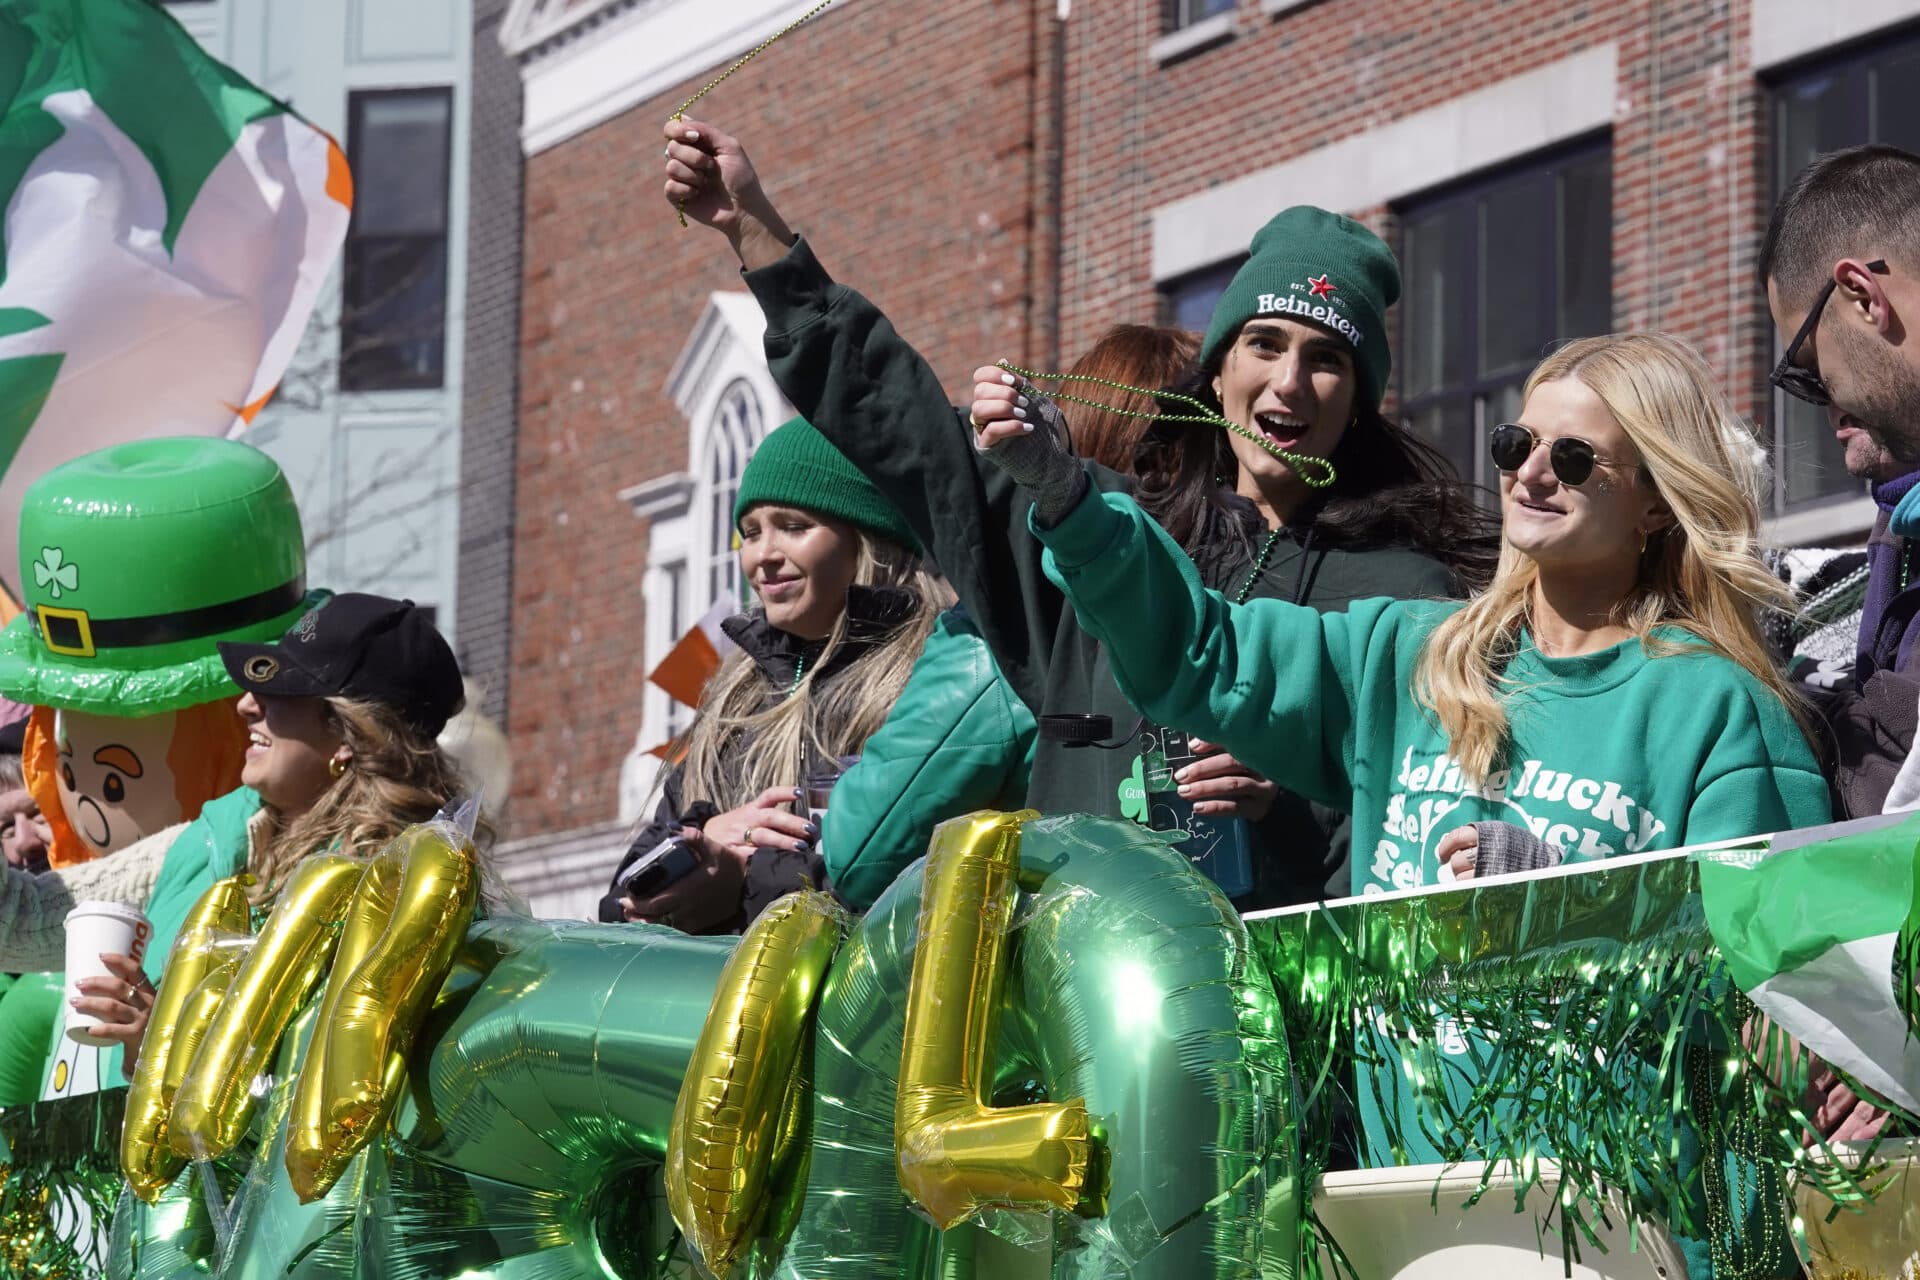 Photos Boston celebrates at a chilly St. Patrick’s Day parade WBUR News